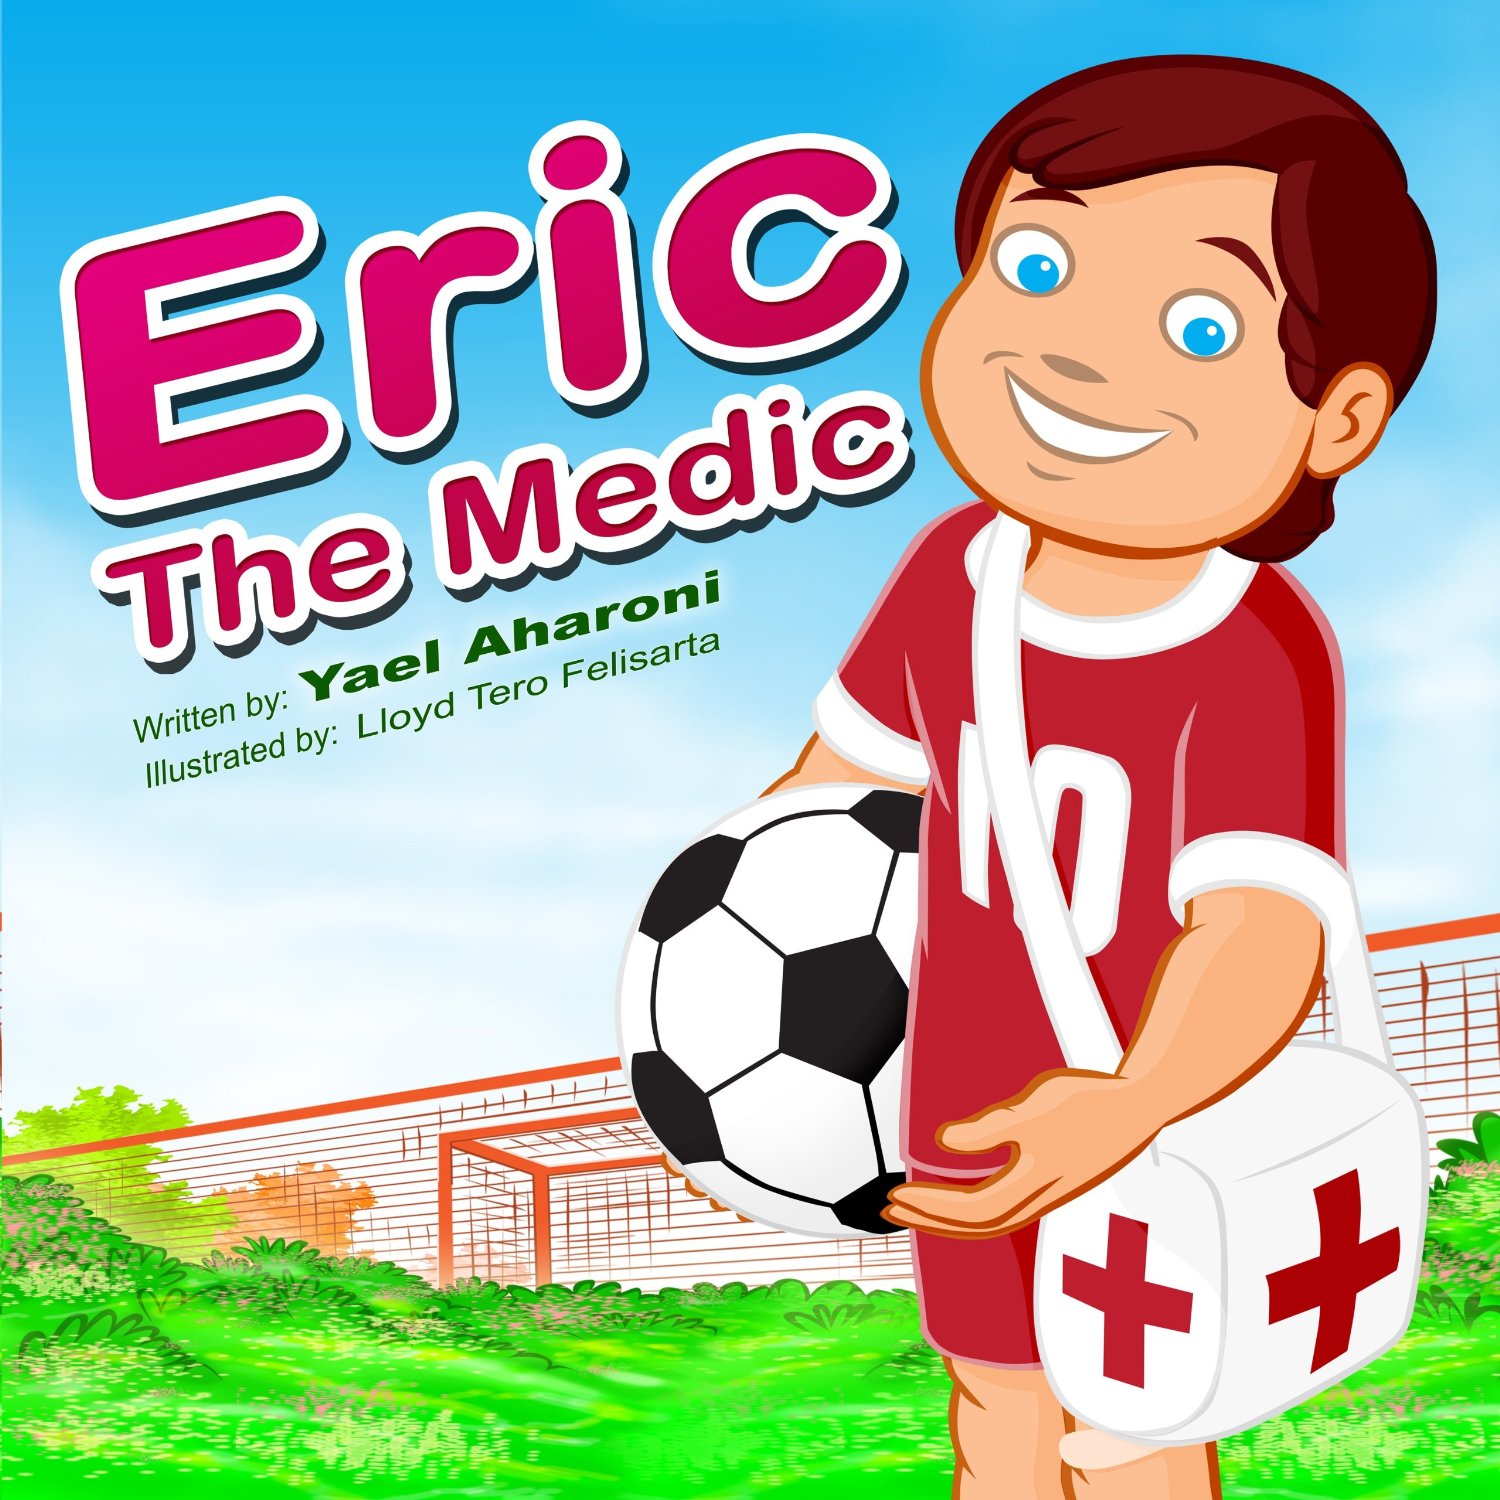 Eric the Medic by Yael Aharoni